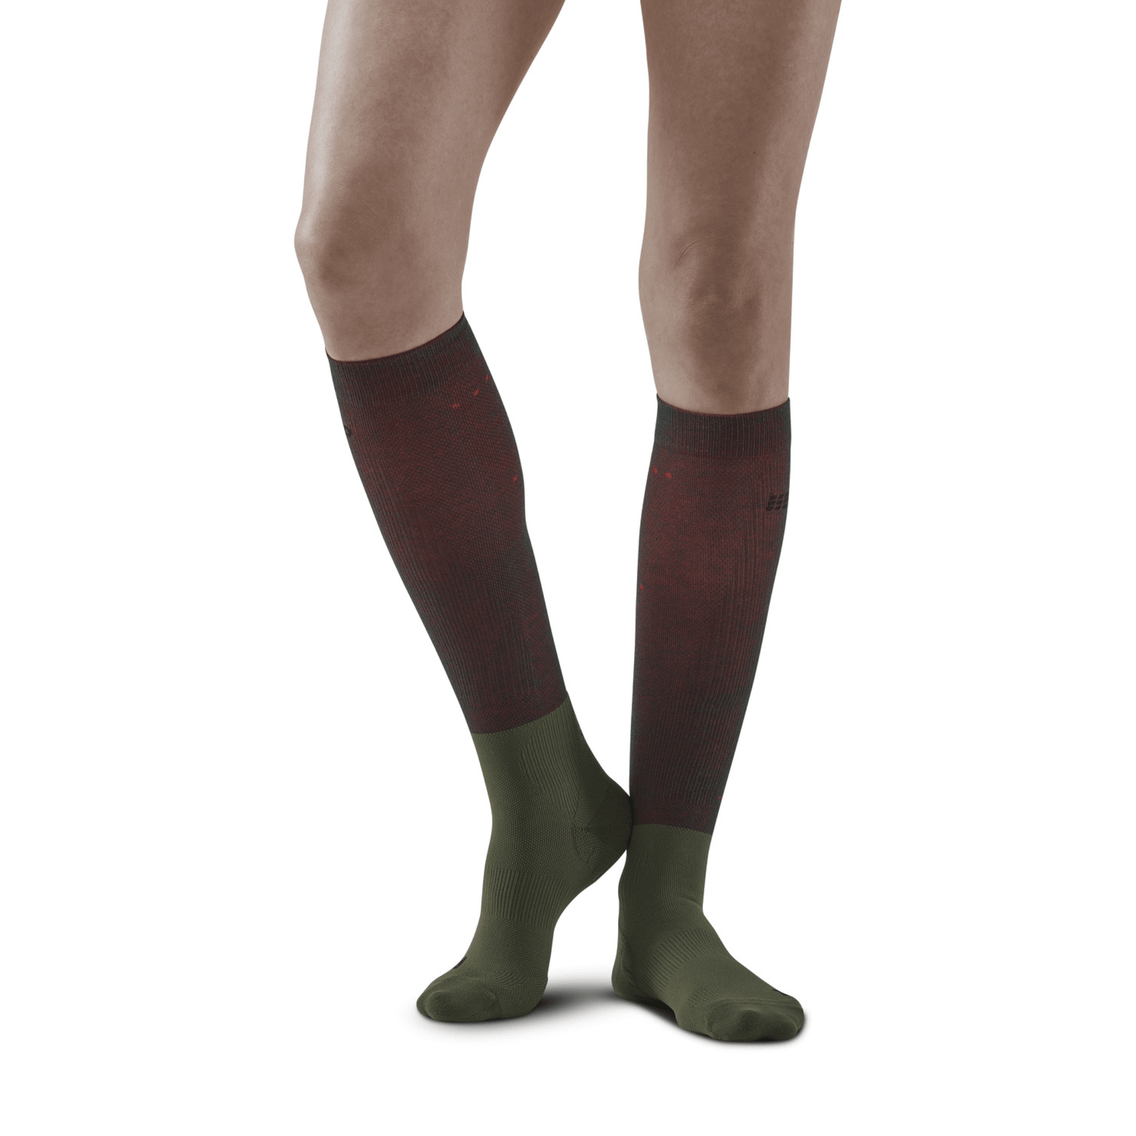 Infrared Recovery Socks, Women